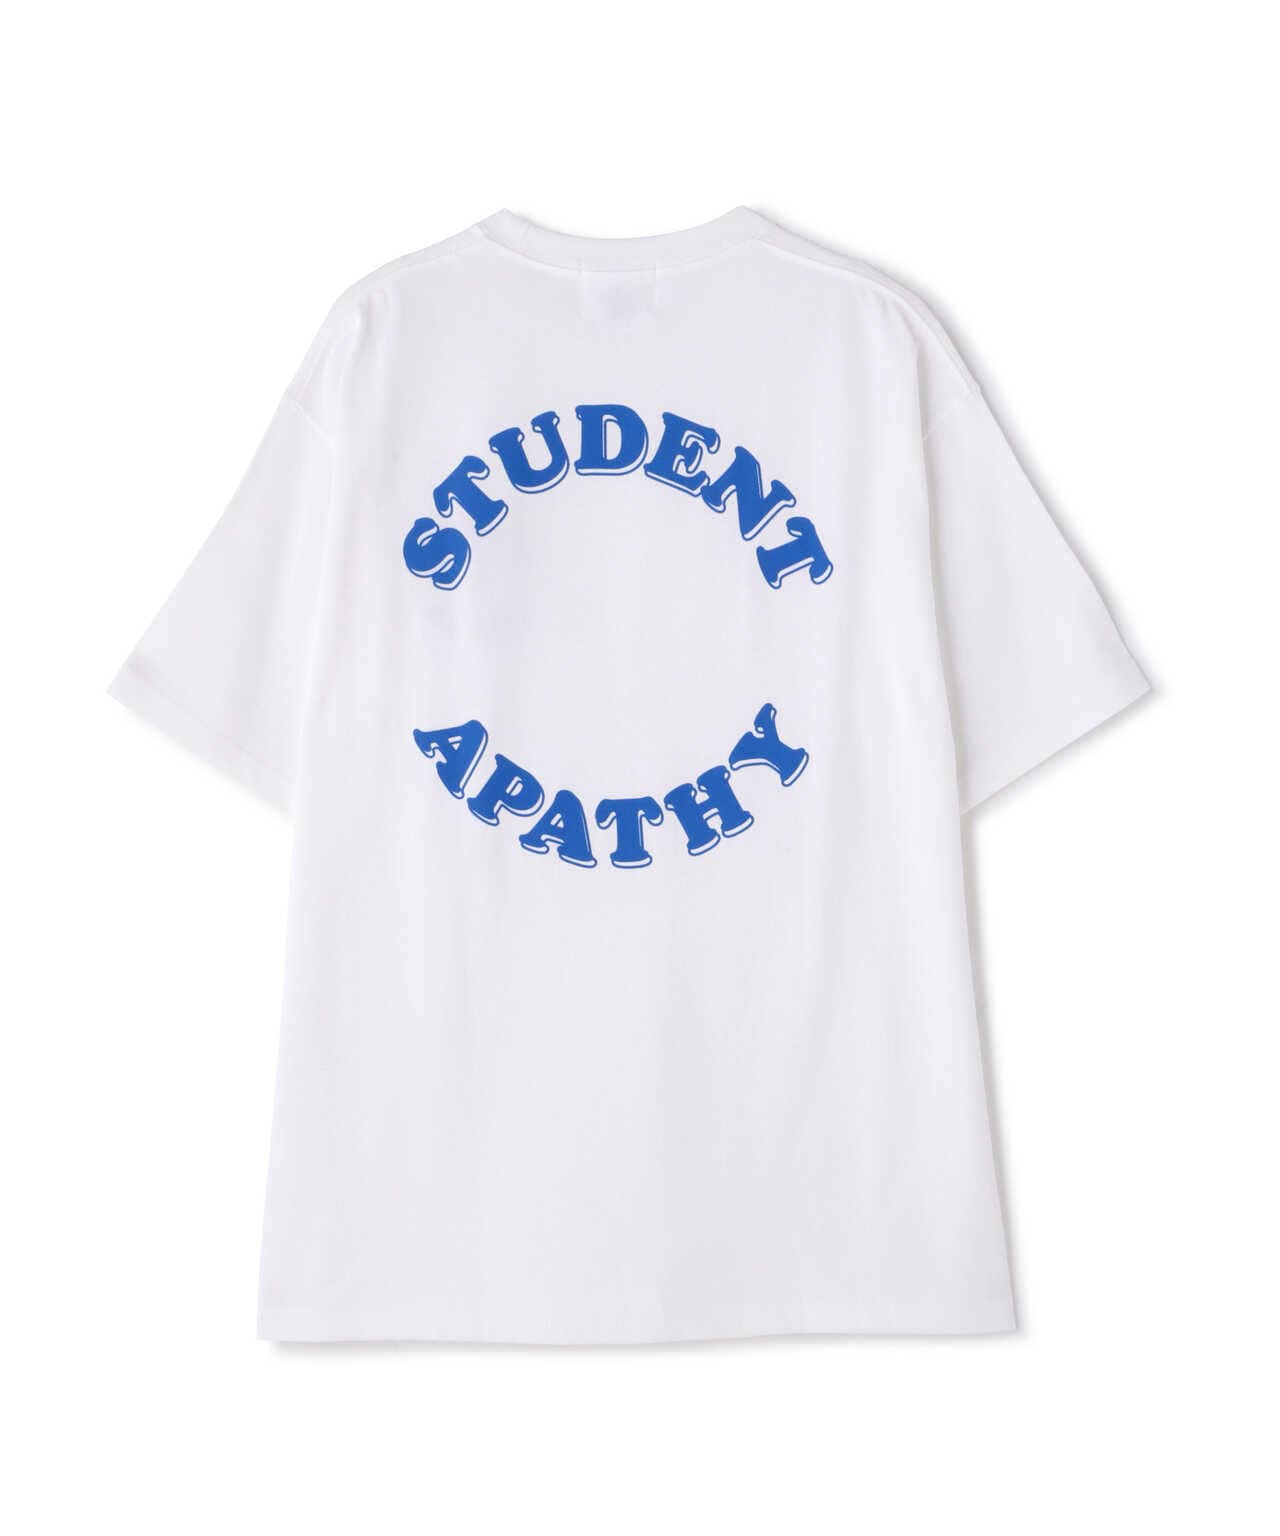 student apathy shirts